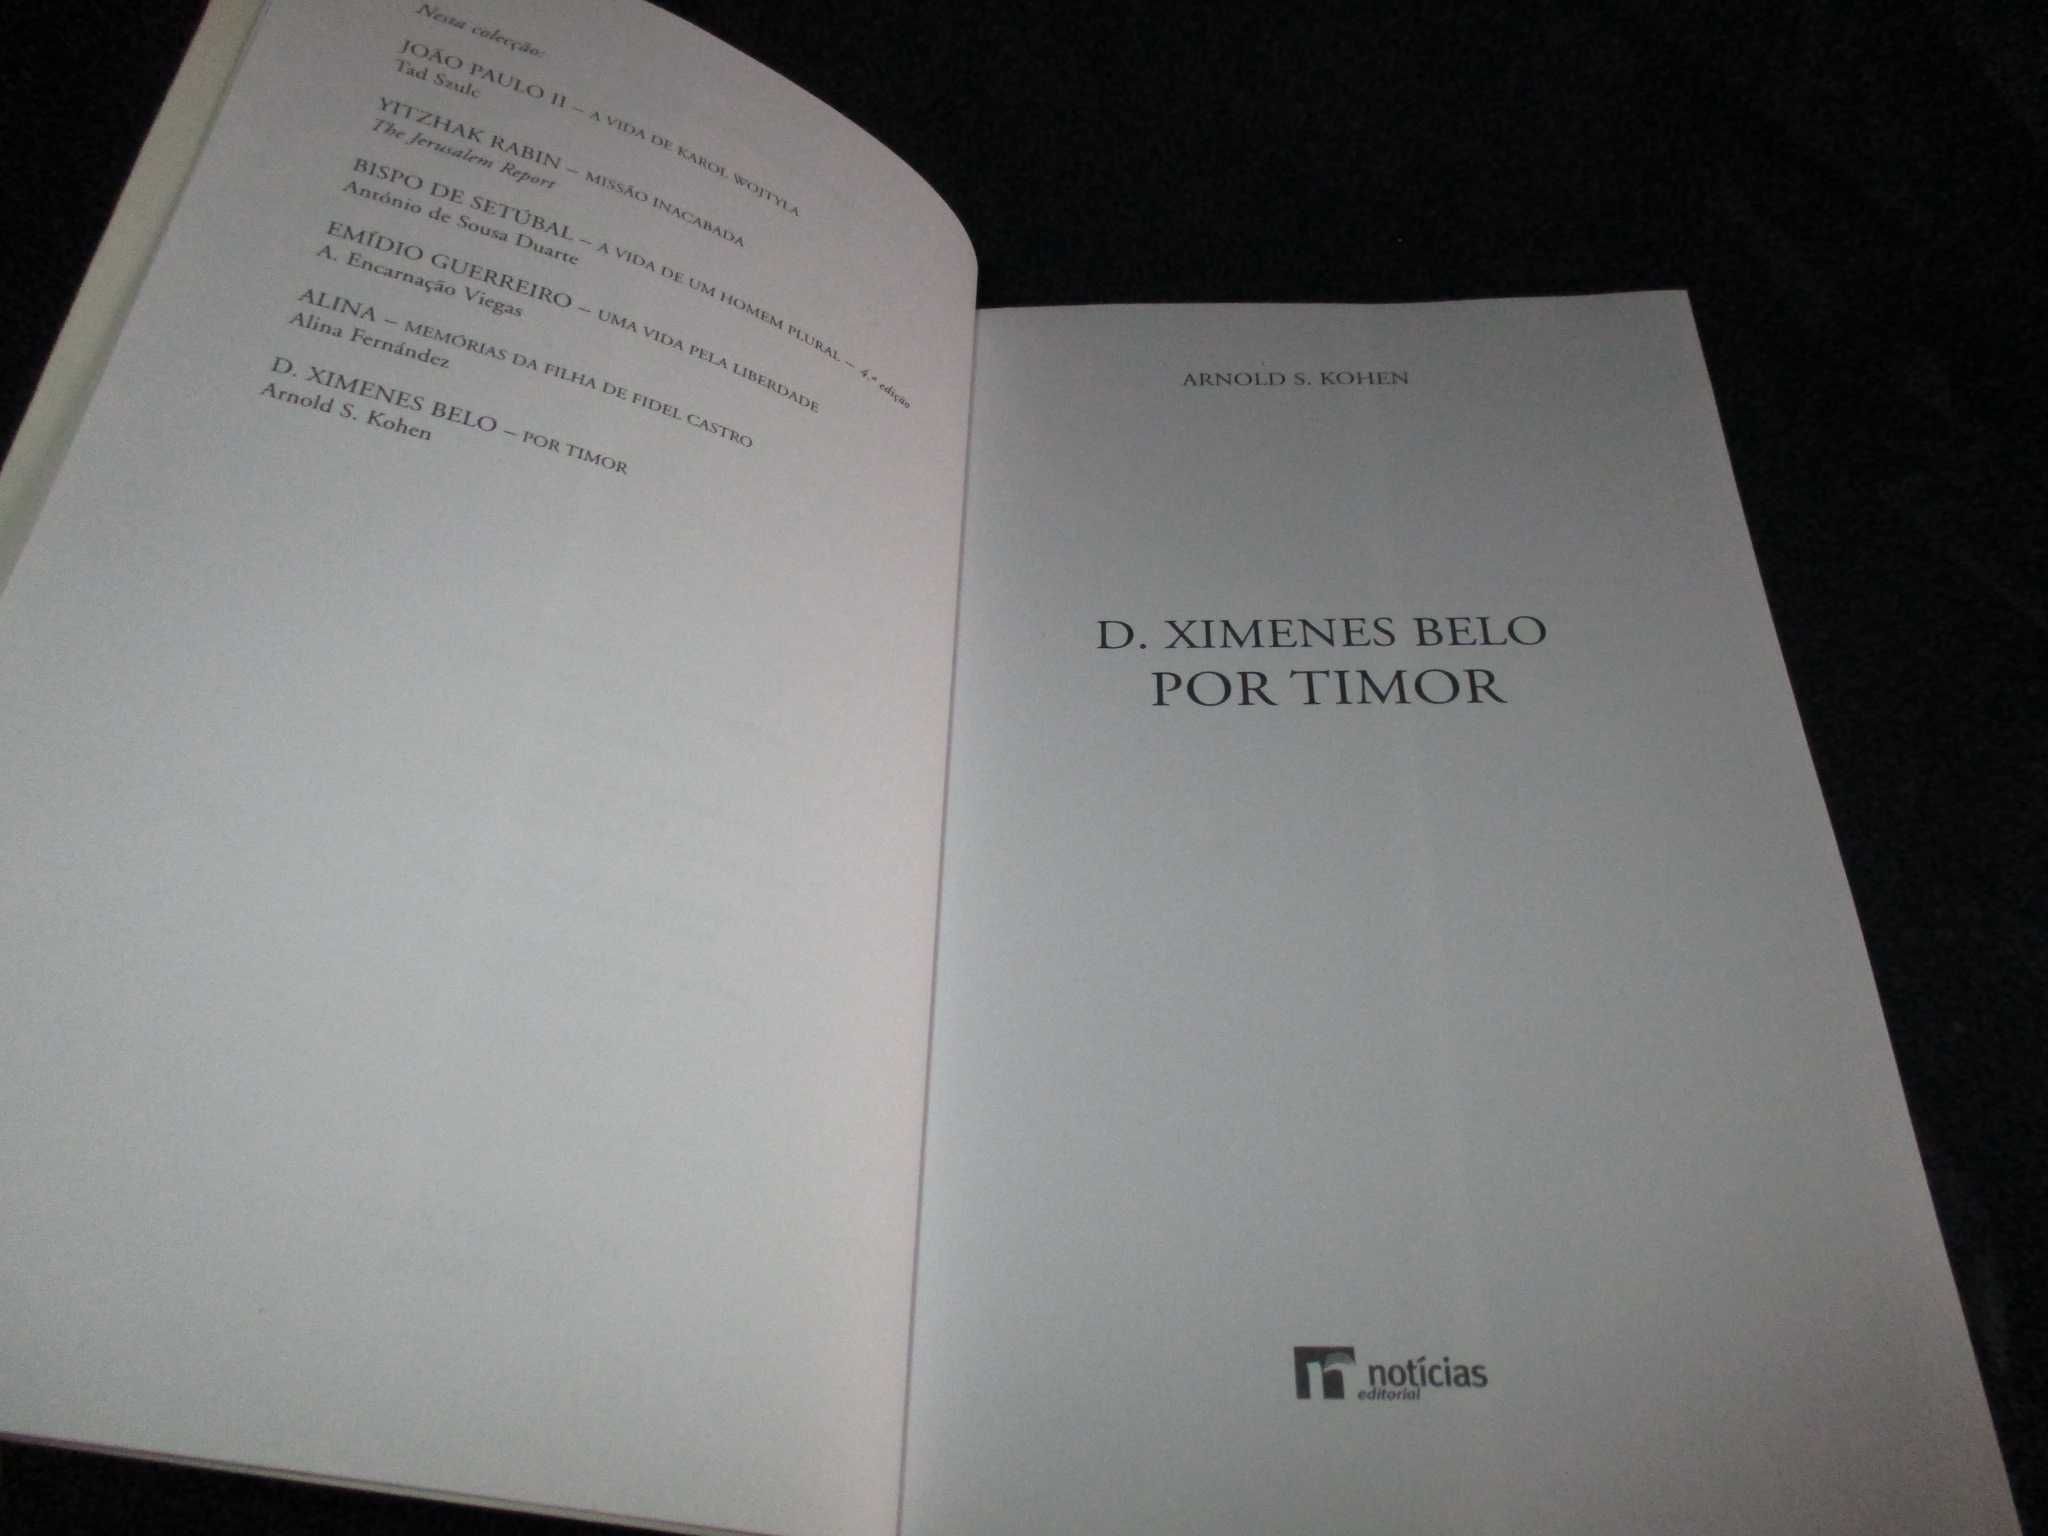 Livro Por Timor Biografia de D. Ximenes Belo Arnold S. Kohen